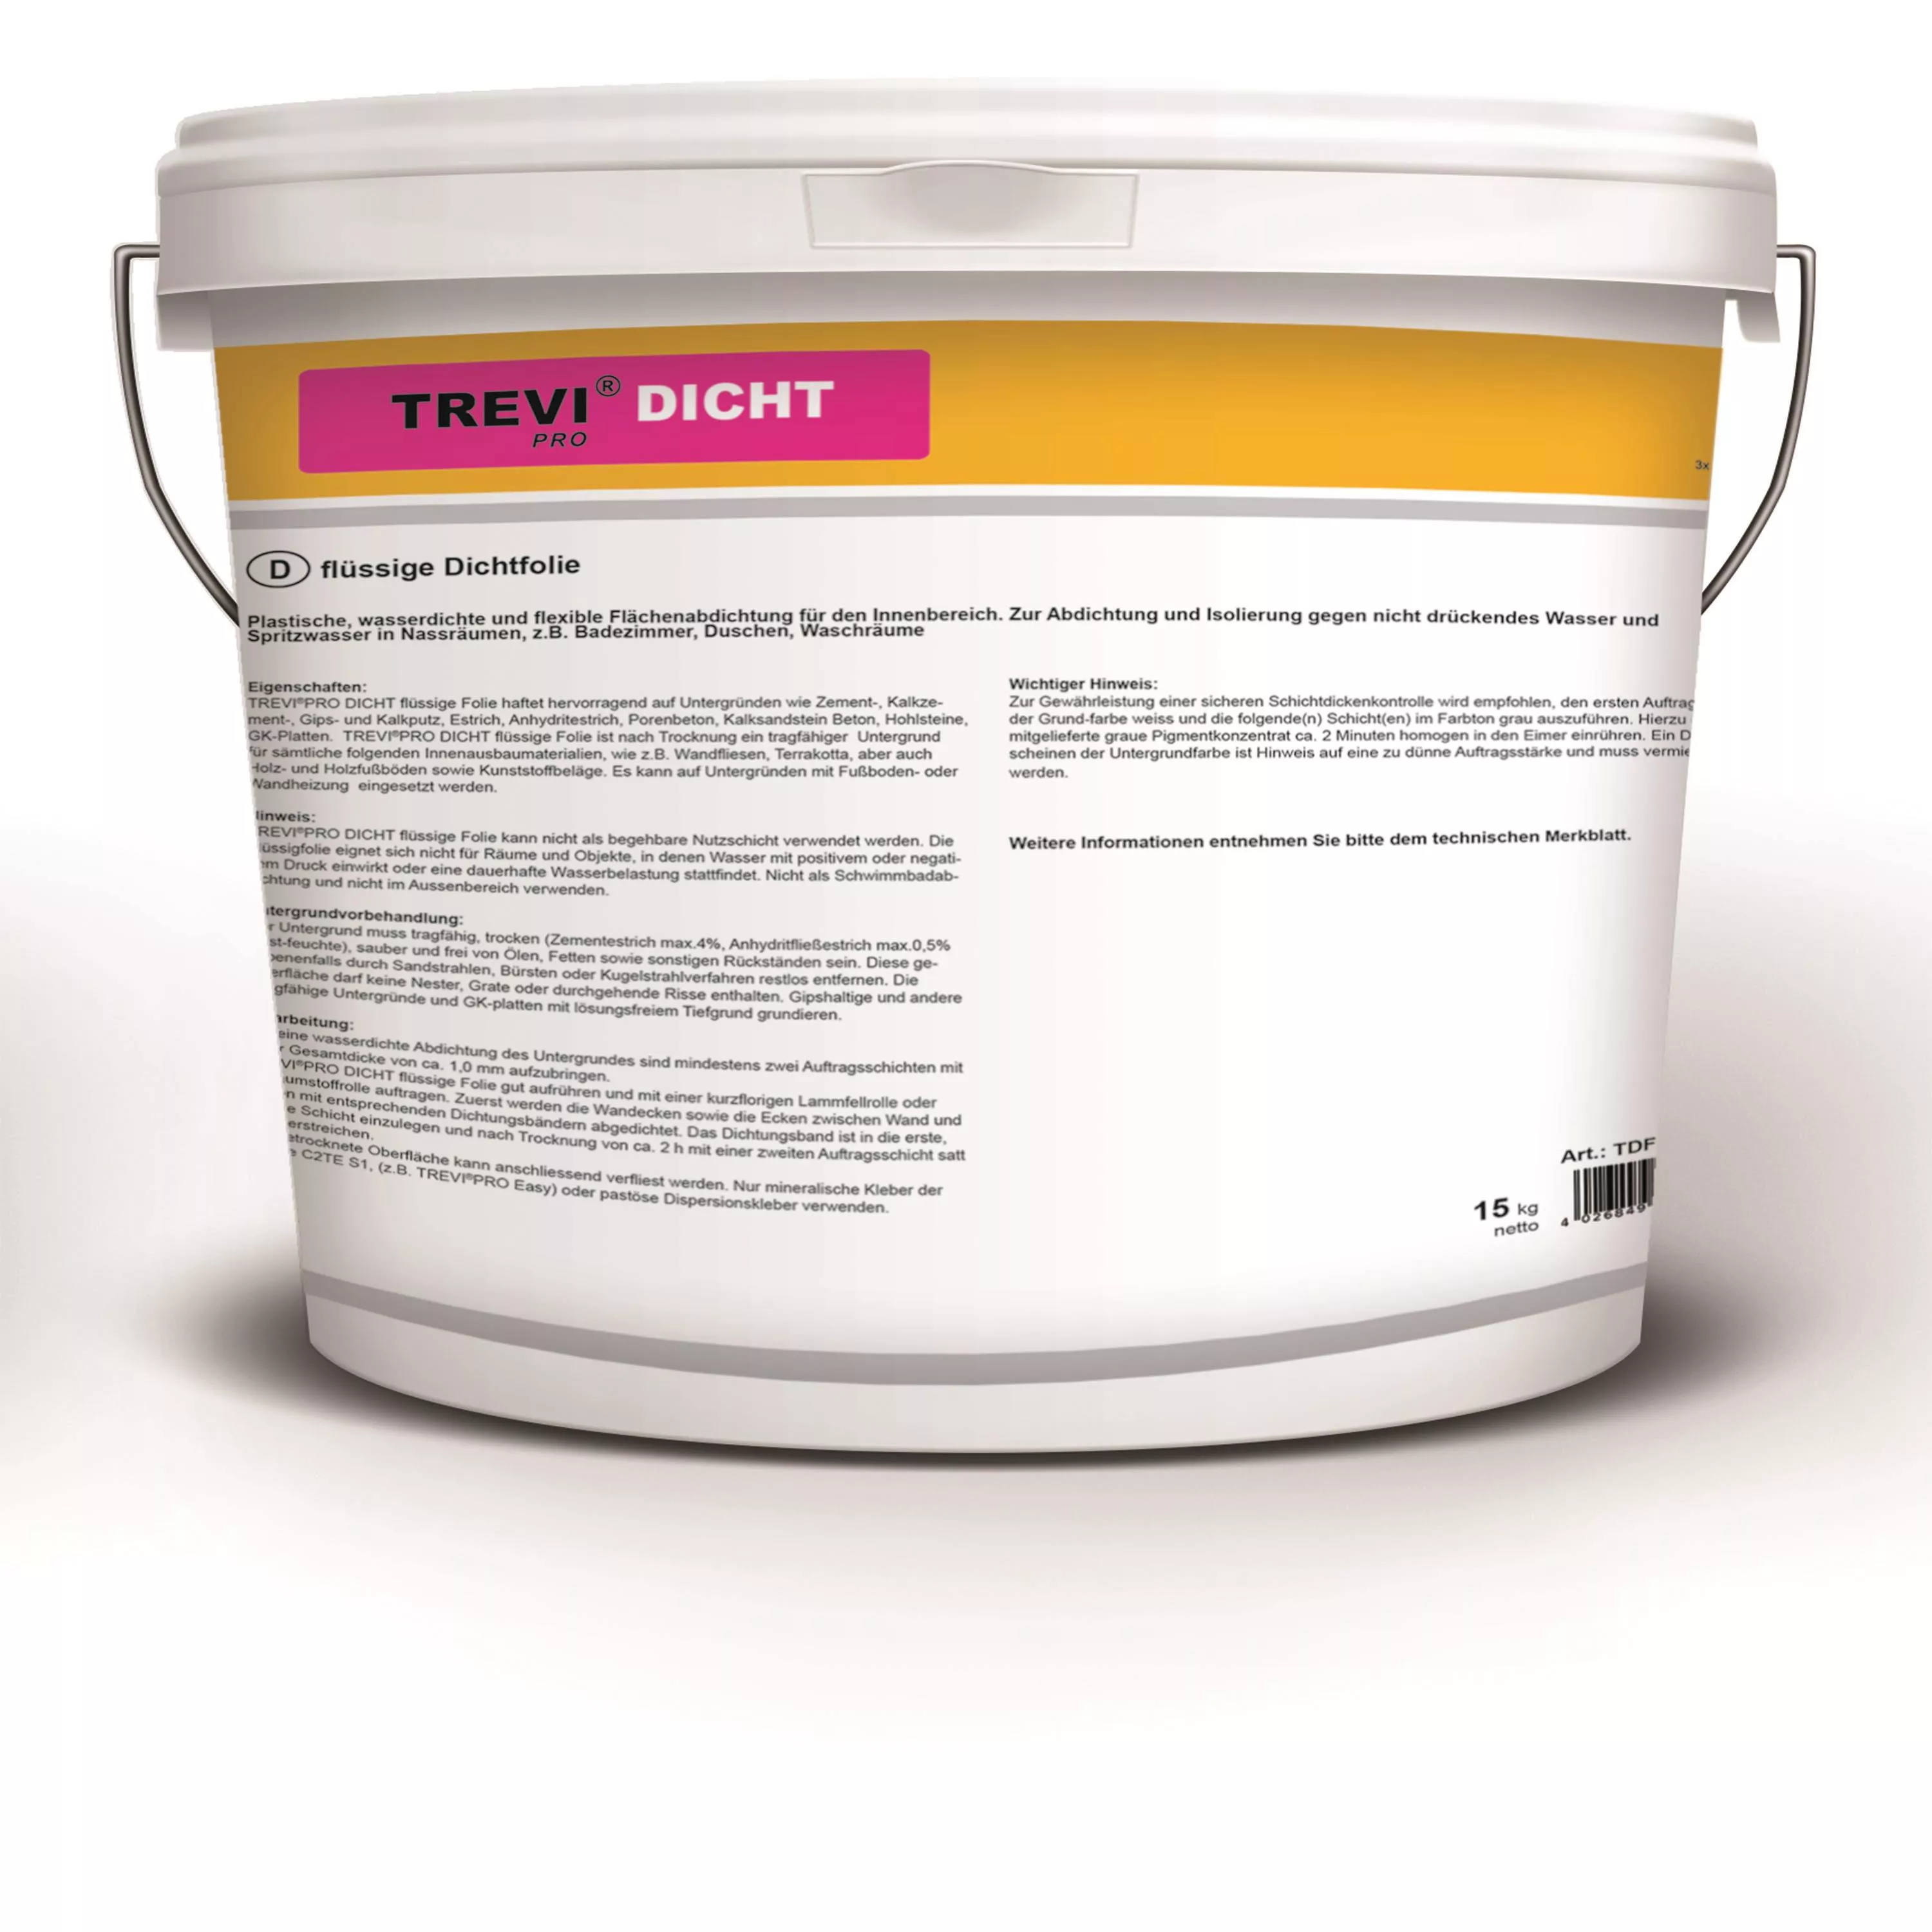 Trevi Pro Tight Liquid Sealing Film Off White (15KG)